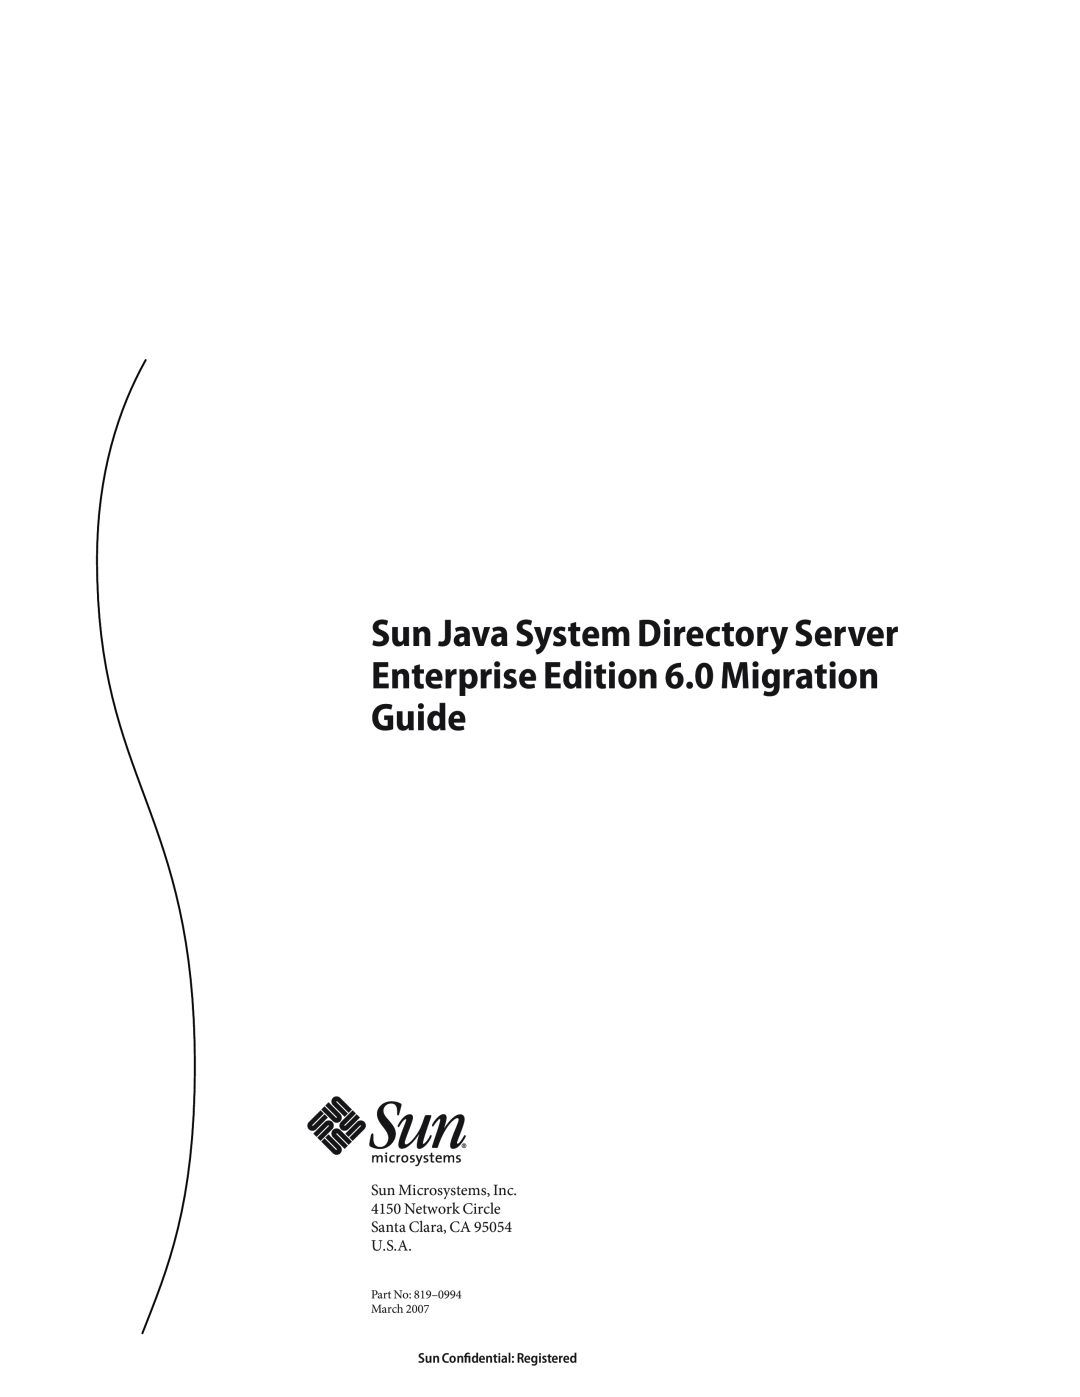 Sun Microsystems 8190994 manual Enterprise Edition 6.0 Migration Guide, Sun Java System Directory Server 